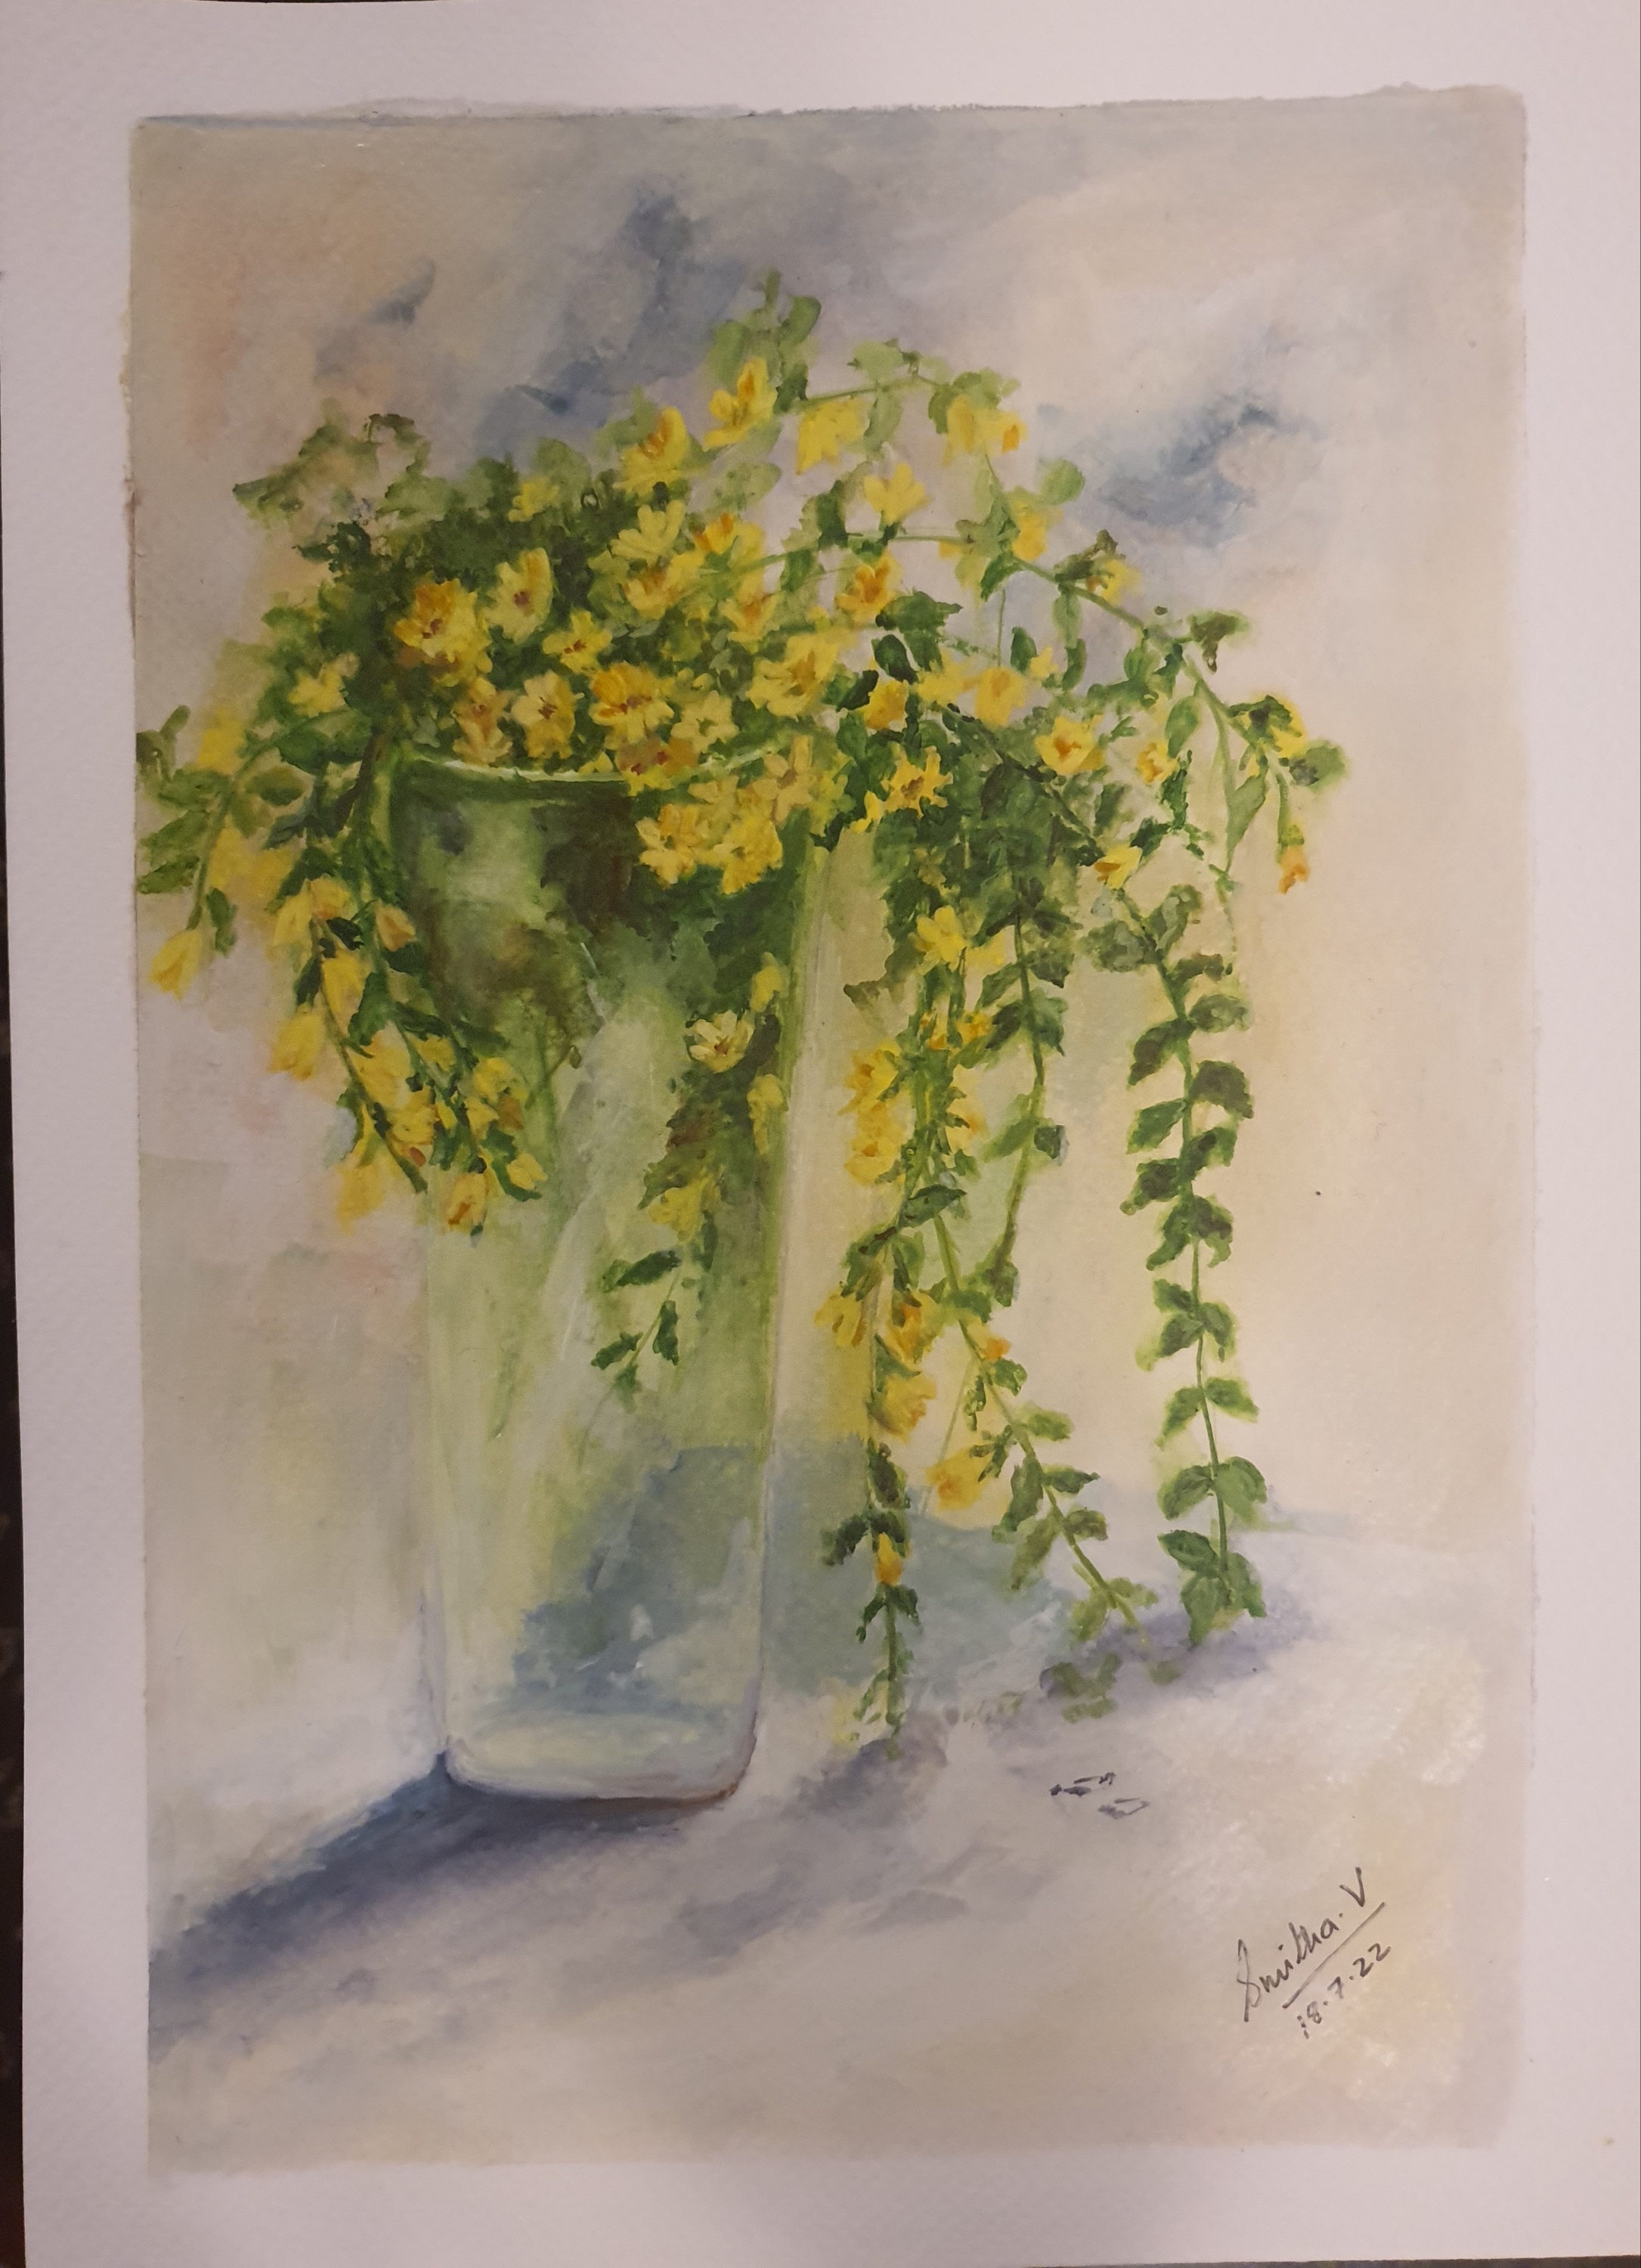 Art: Sunshine in my vase